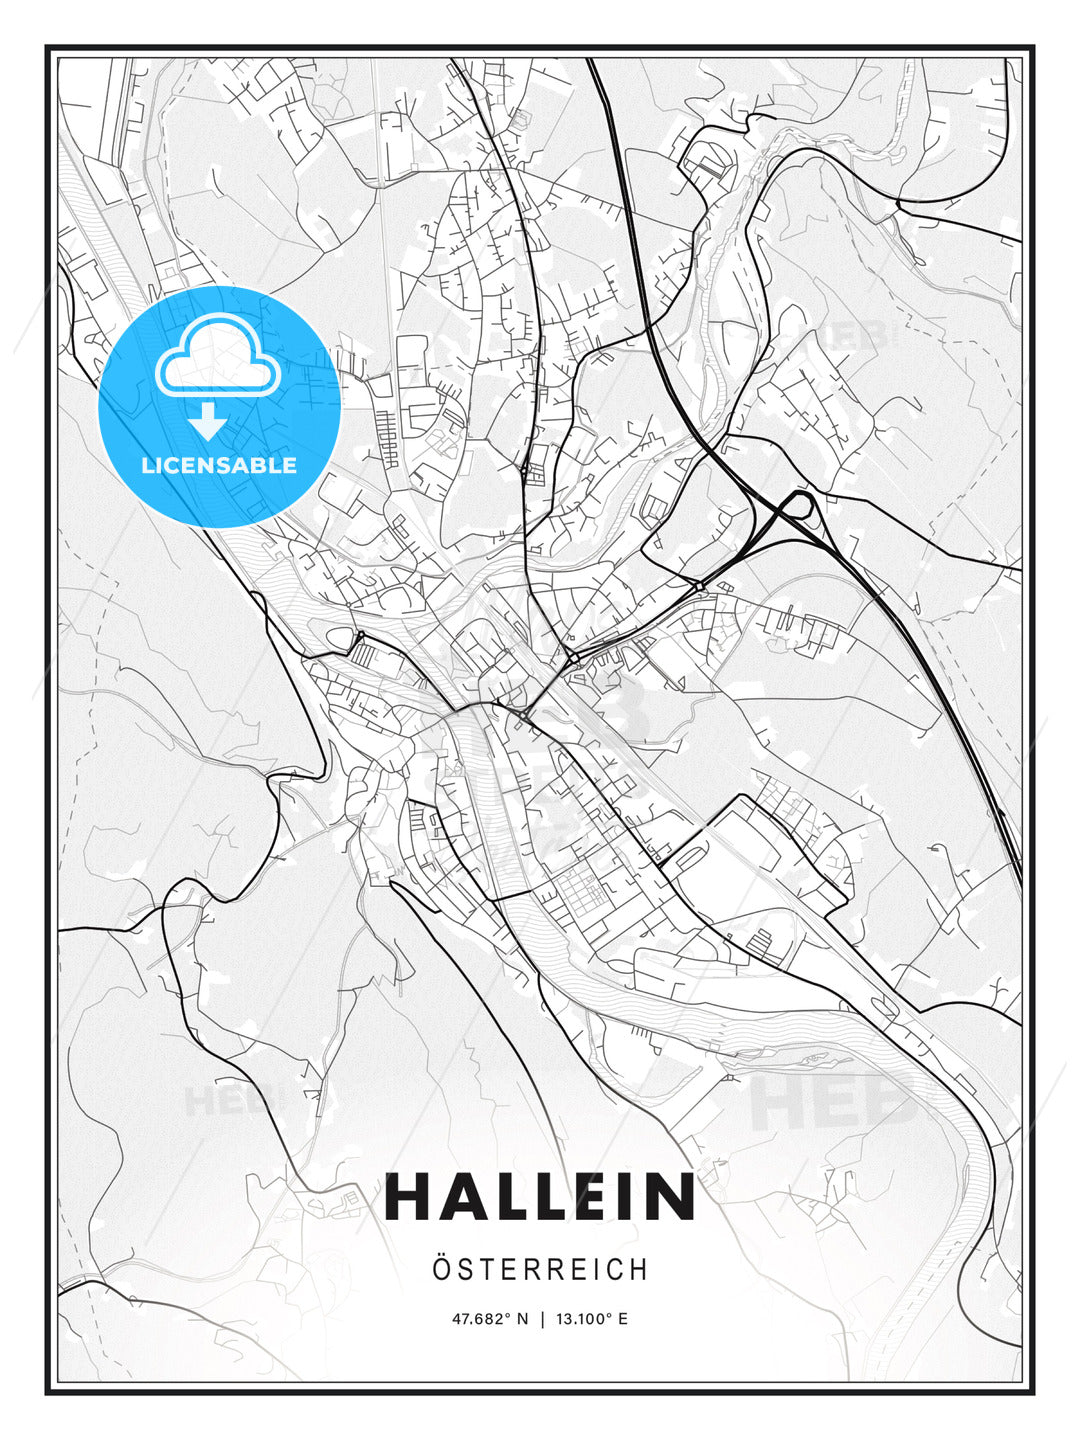 Hallein, Austria, Modern Print Template in Various Formats - HEBSTREITS Sketches